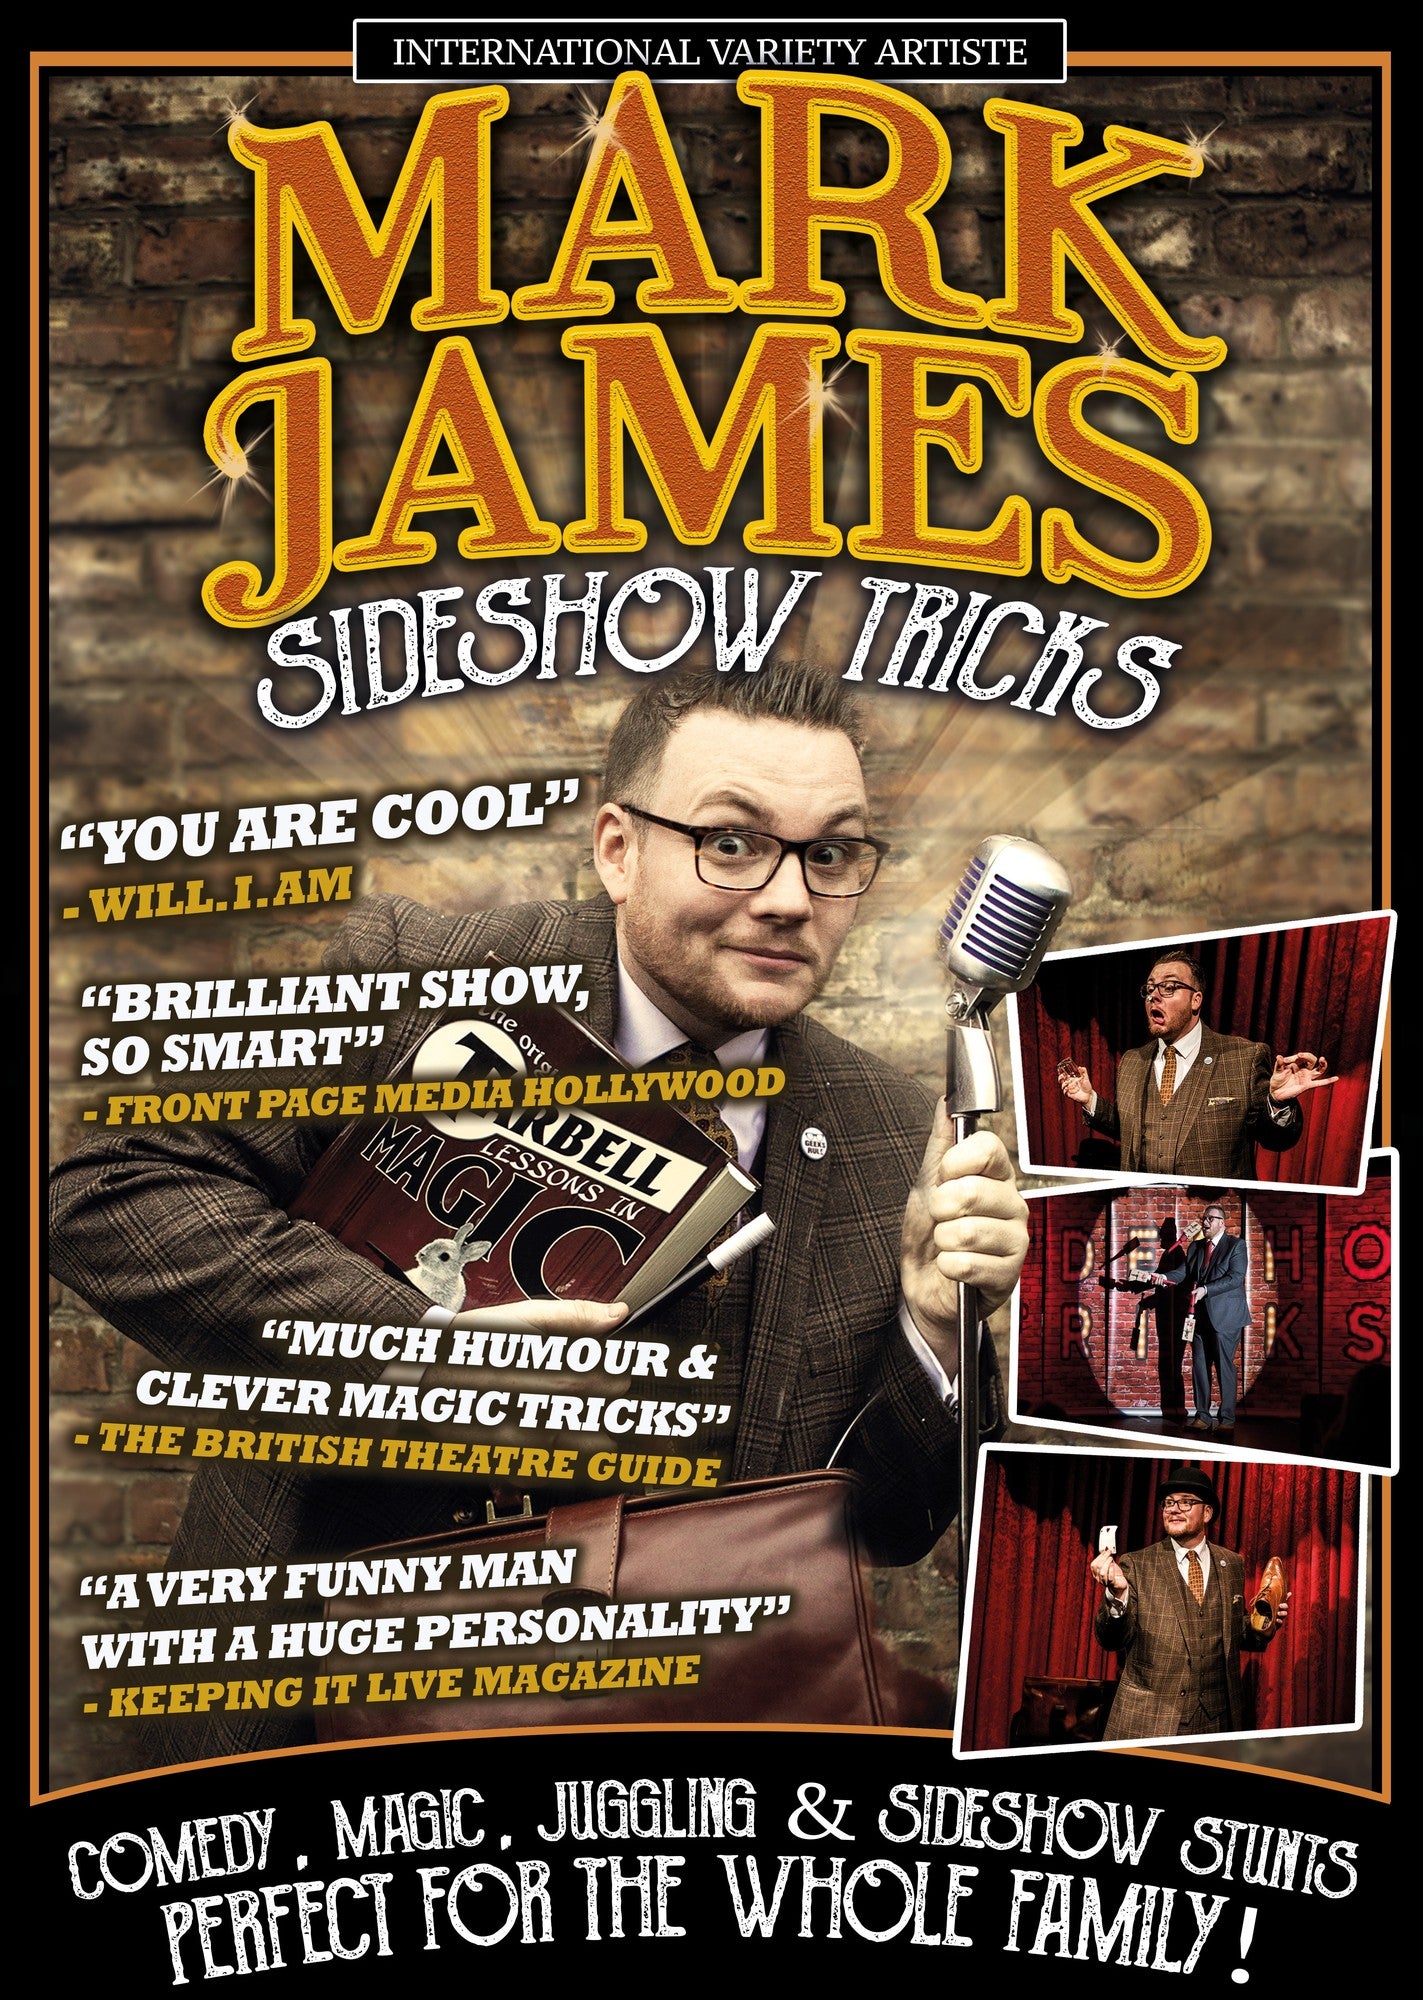 Sideshow Tricks - Mark James, Tickets